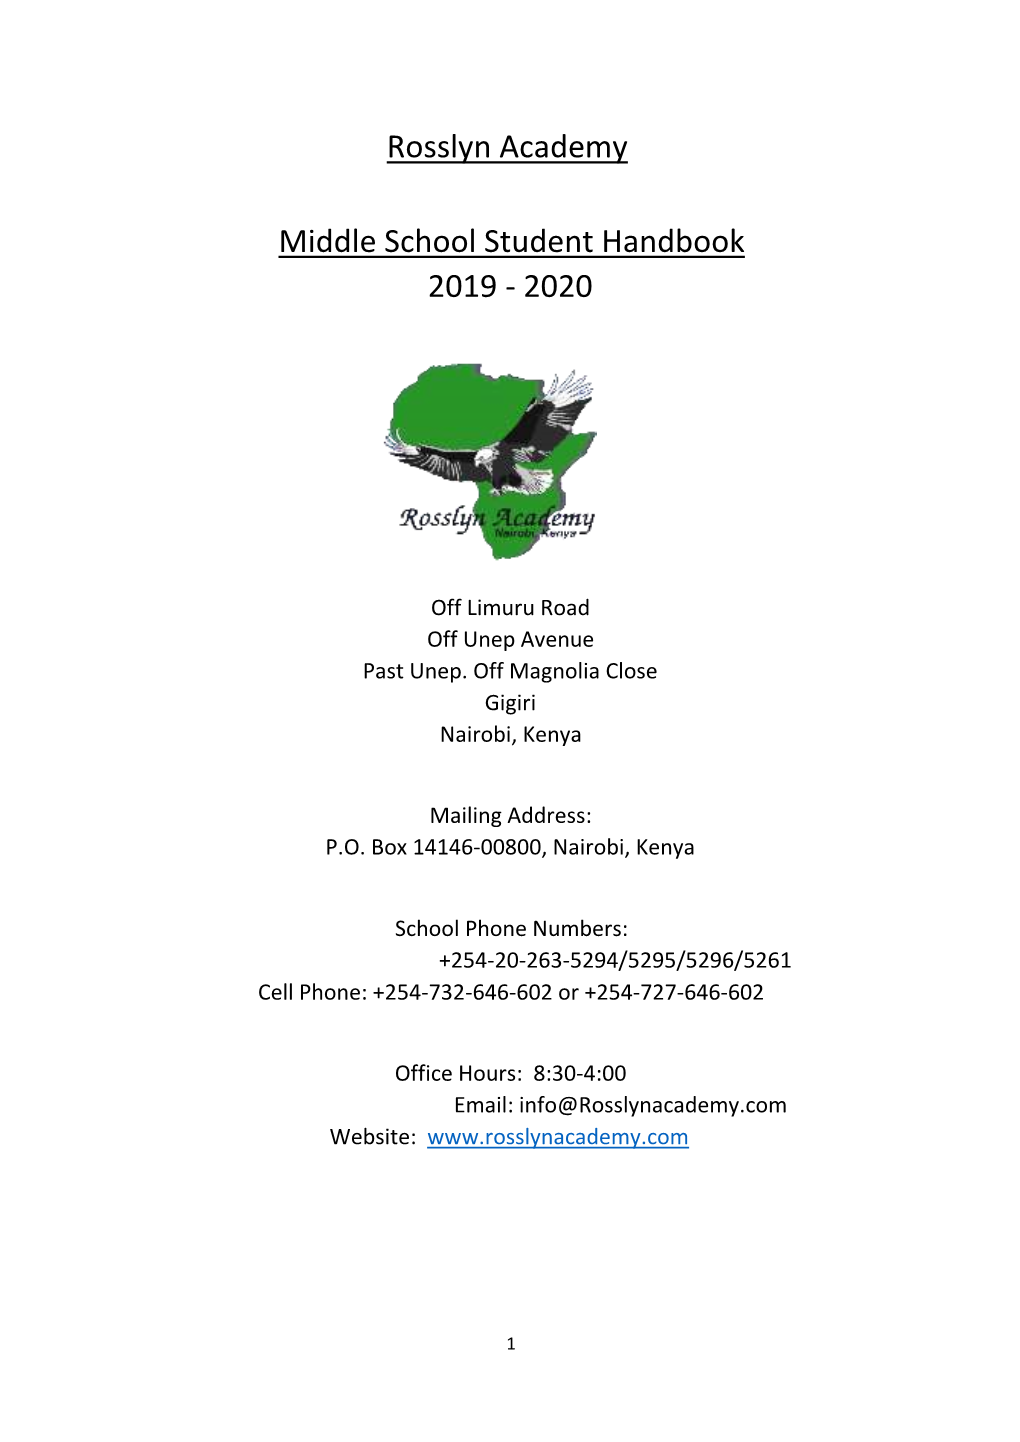 Rosslyn Academy Middle School Student Handbook 2019